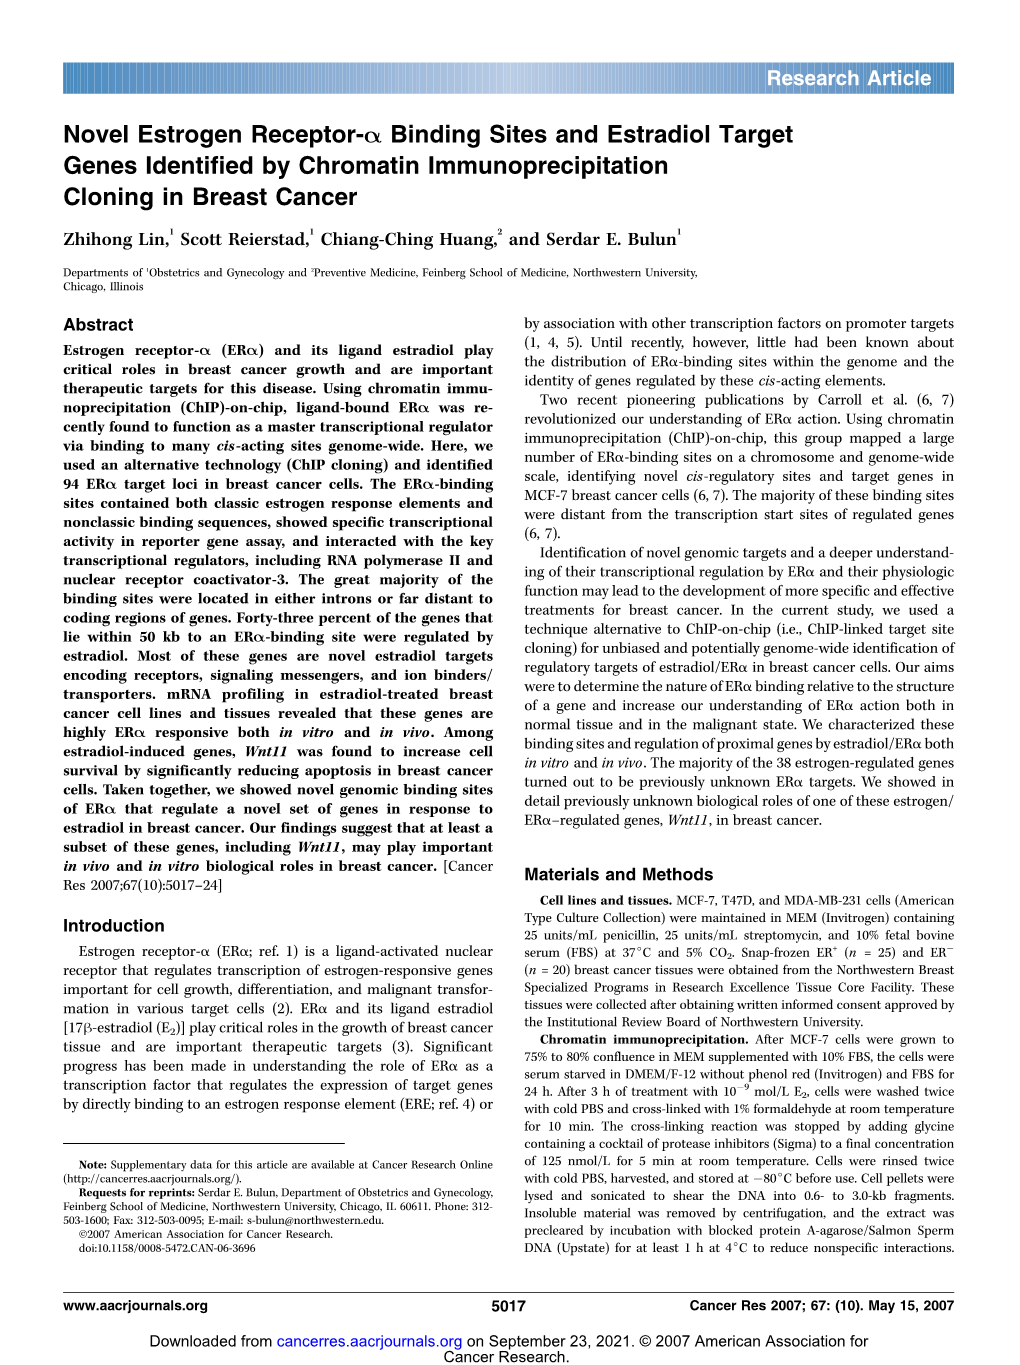 Novel Estrogen Receptor-A Binding Sites and Estradiol Target Genes Identified by Chromatin Immunoprecipitation Cloning in Breast Cancer